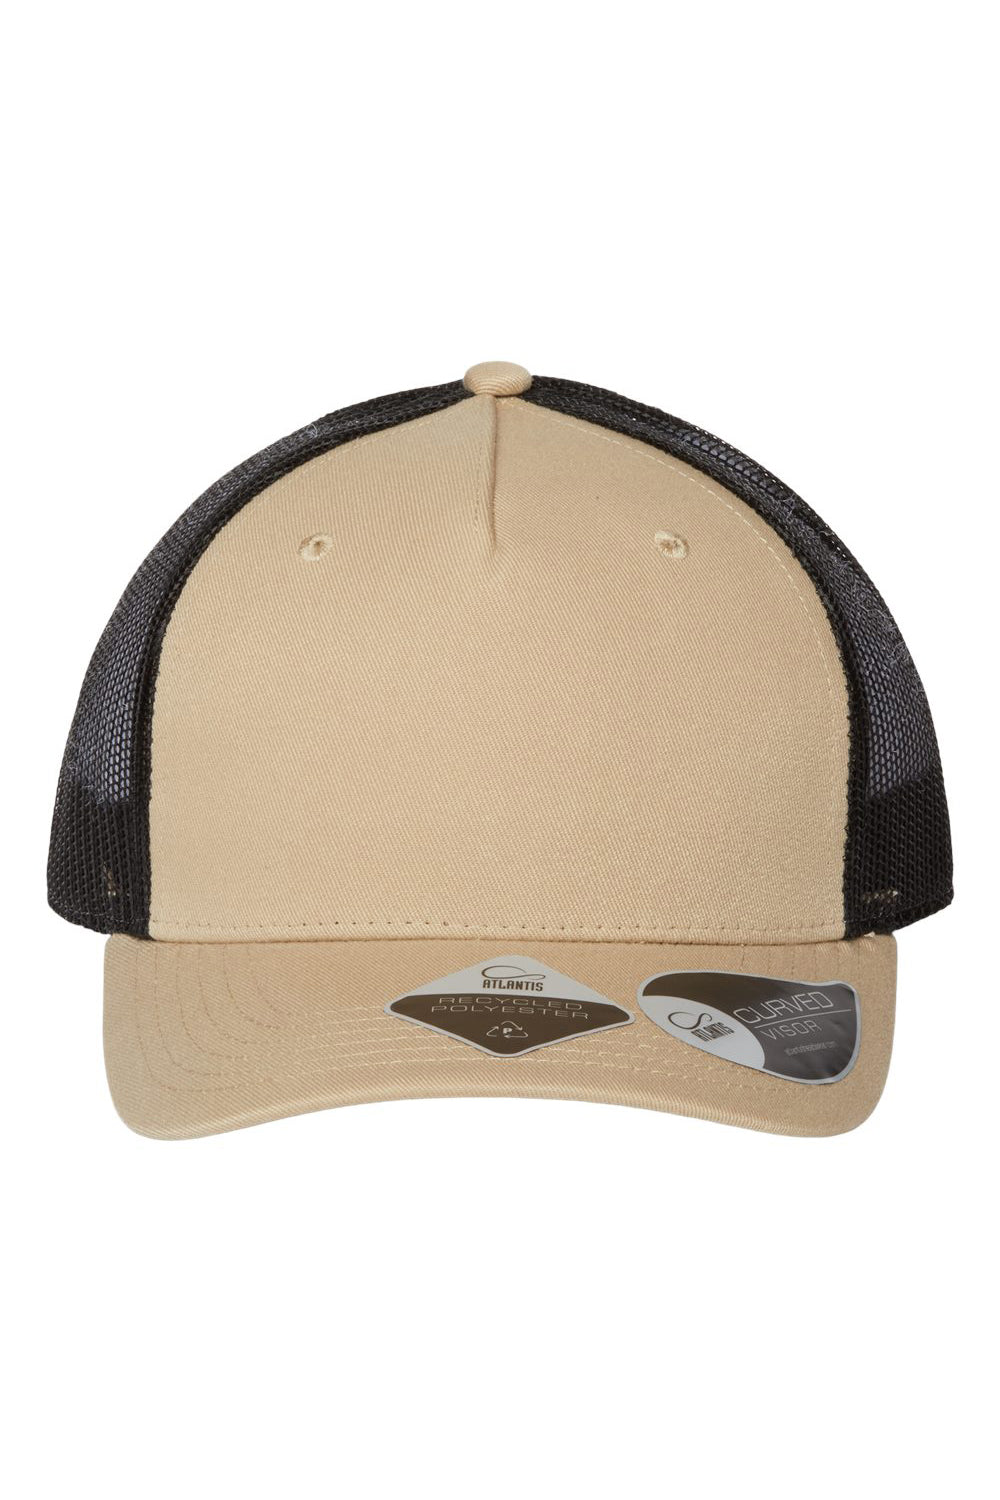 Atlantis Headwear ZION Mens Sustainable Snapback Trucker Hat Khaki/Black Flat Front